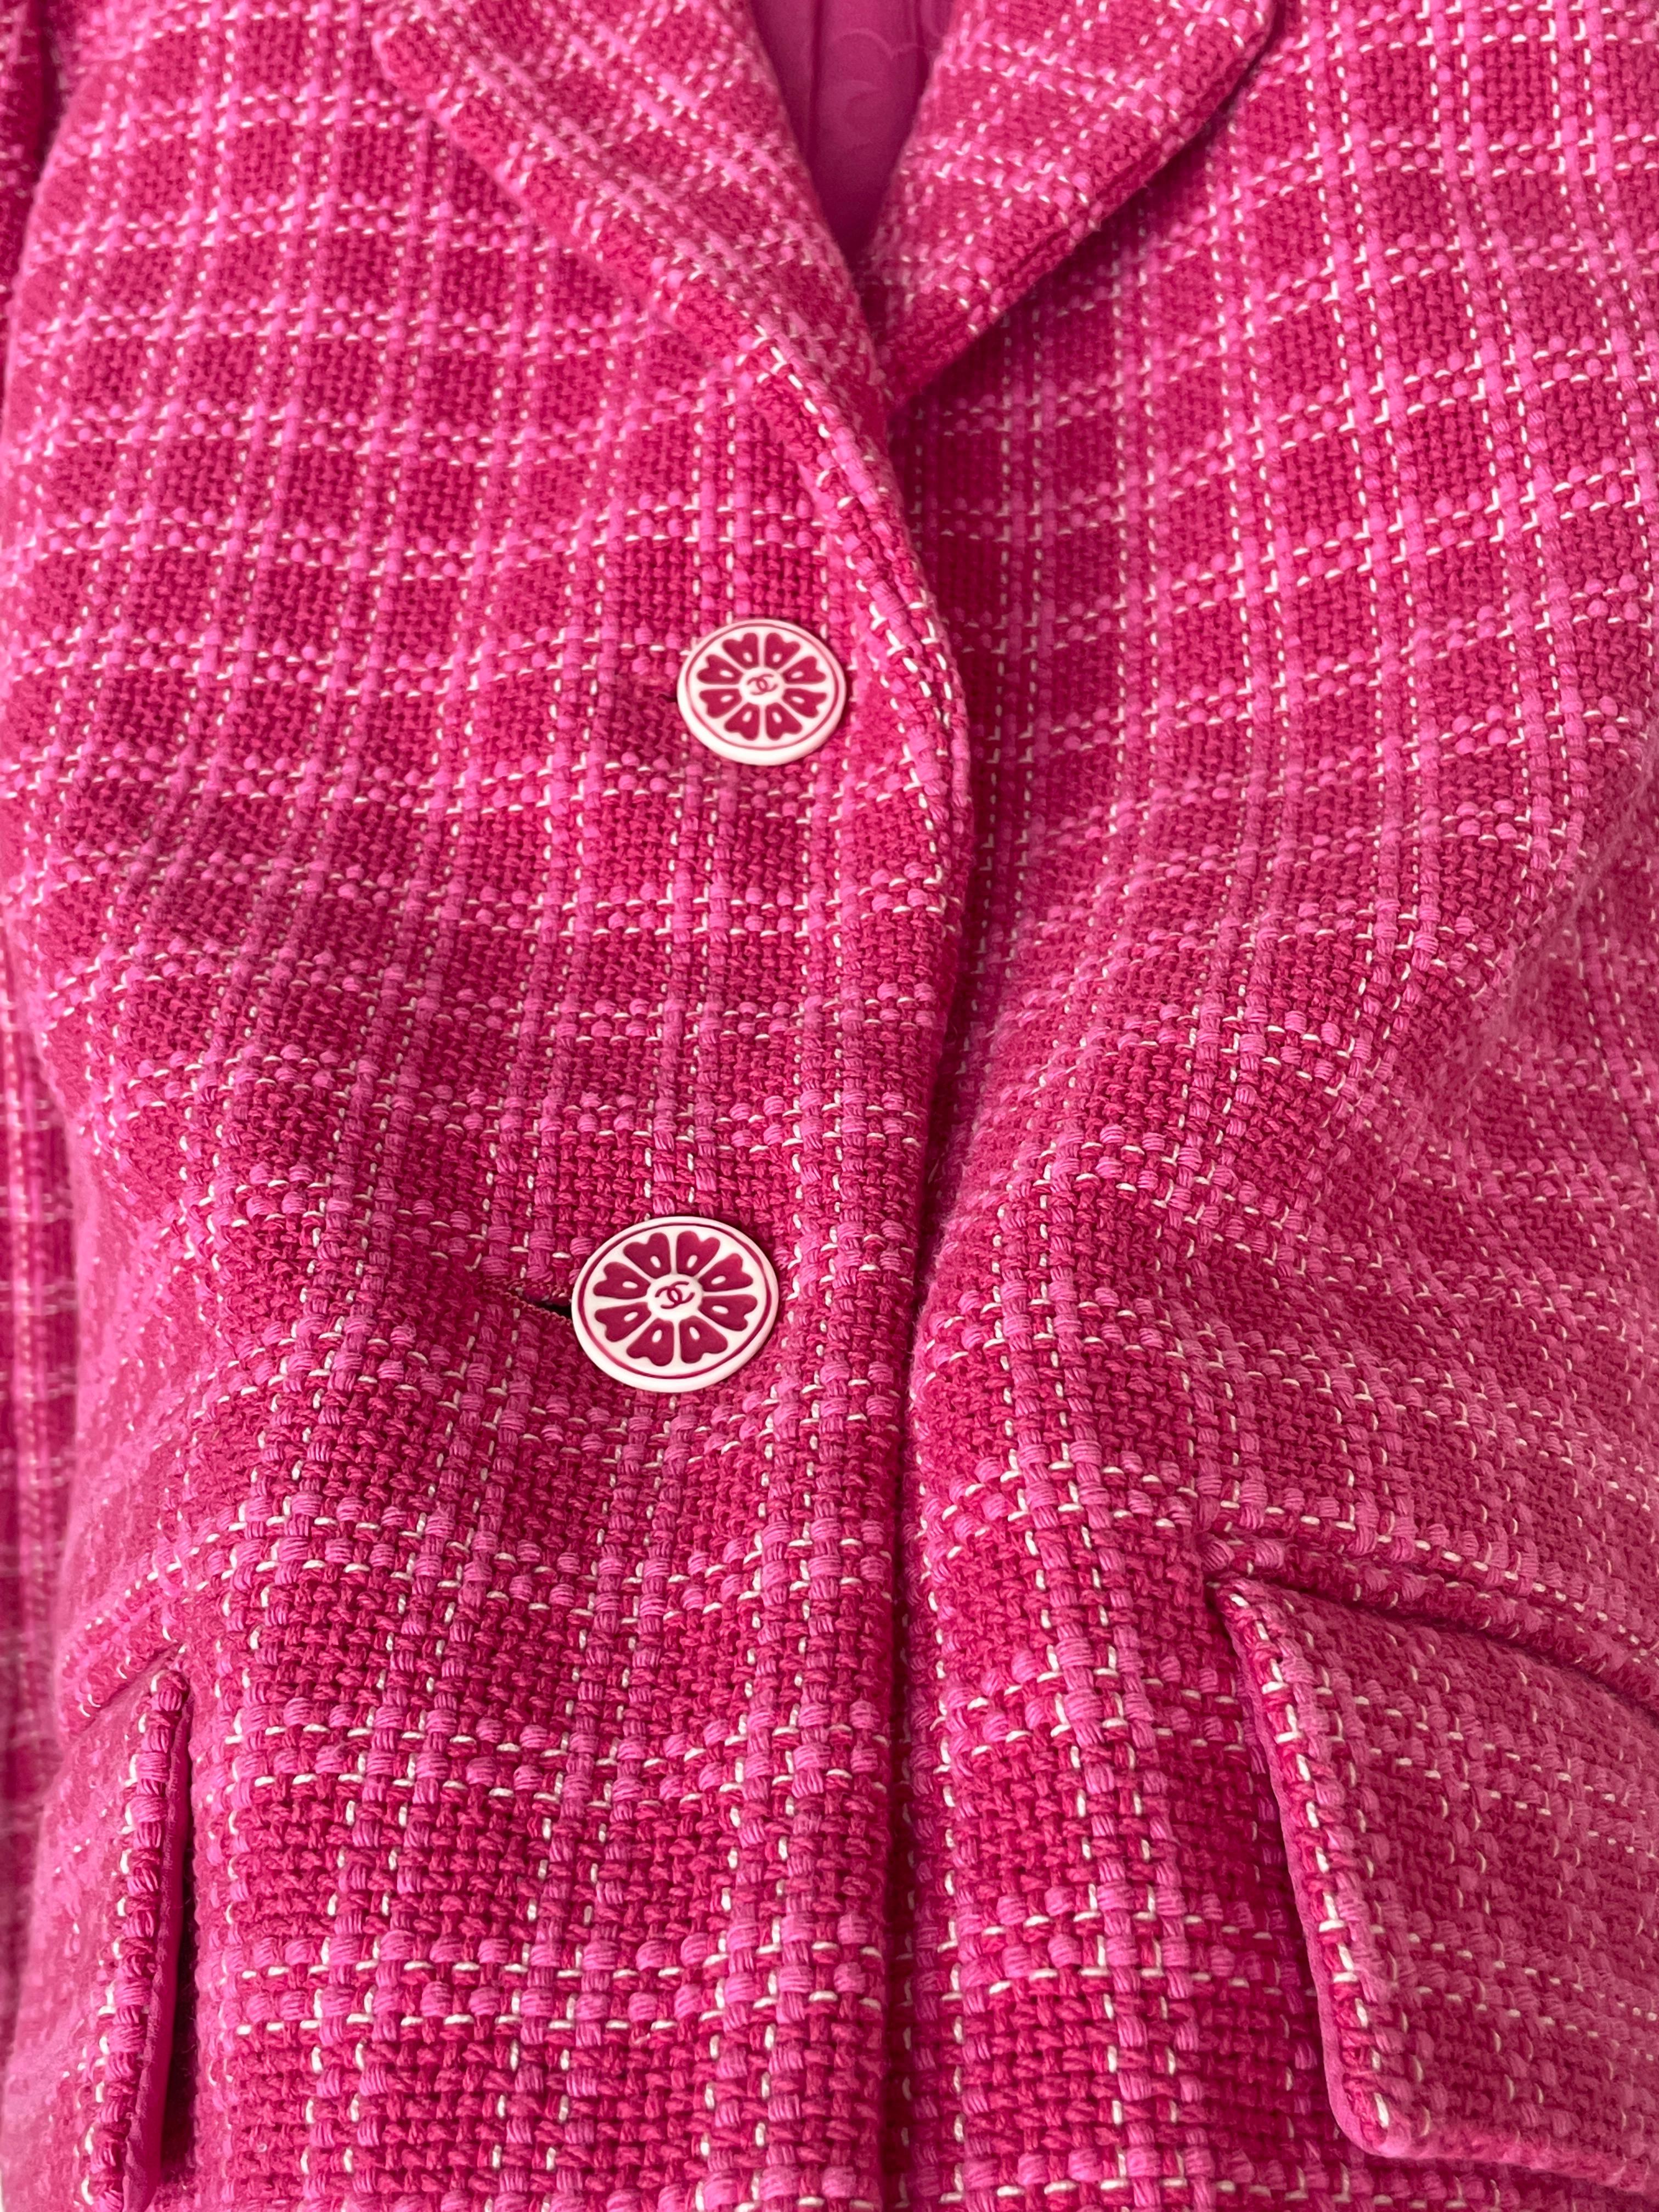 Chanel New Seoul Collection Fuchsia Tweed Jacket 11